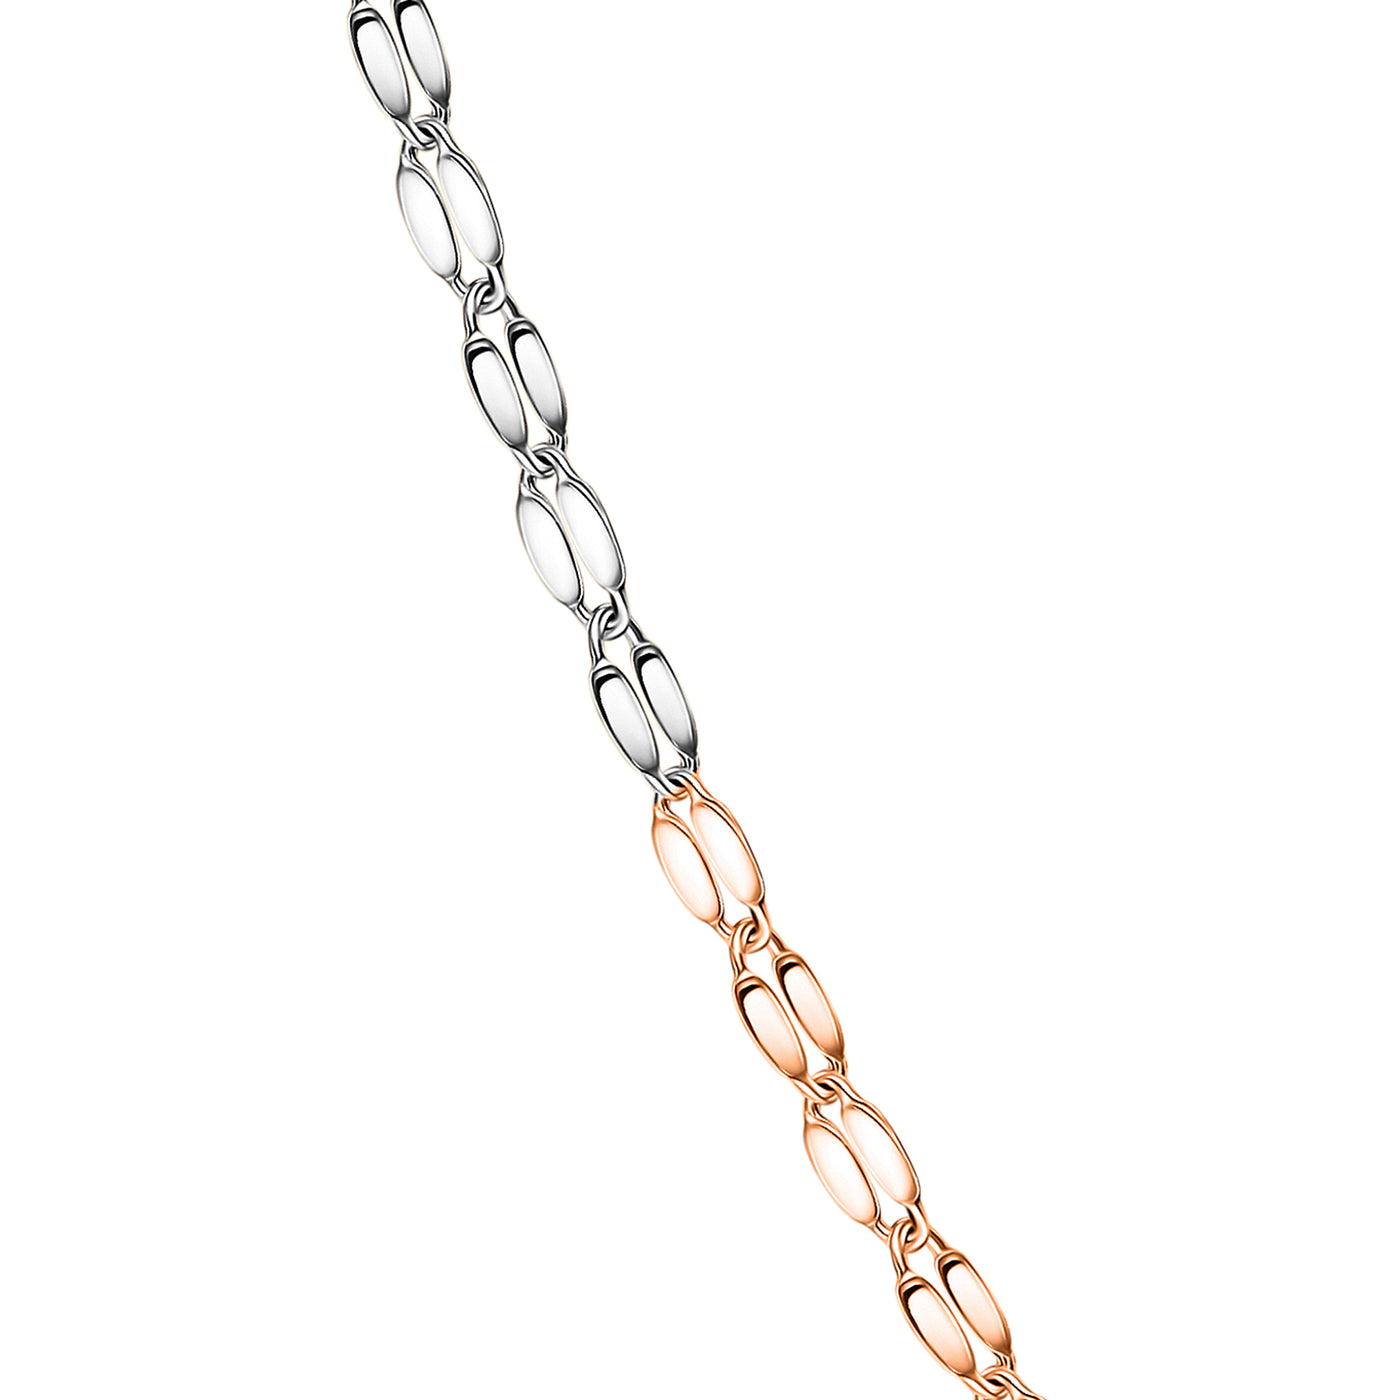 10K Solid Gold 3 tone Diamond Cut Mirror Chain Necklace